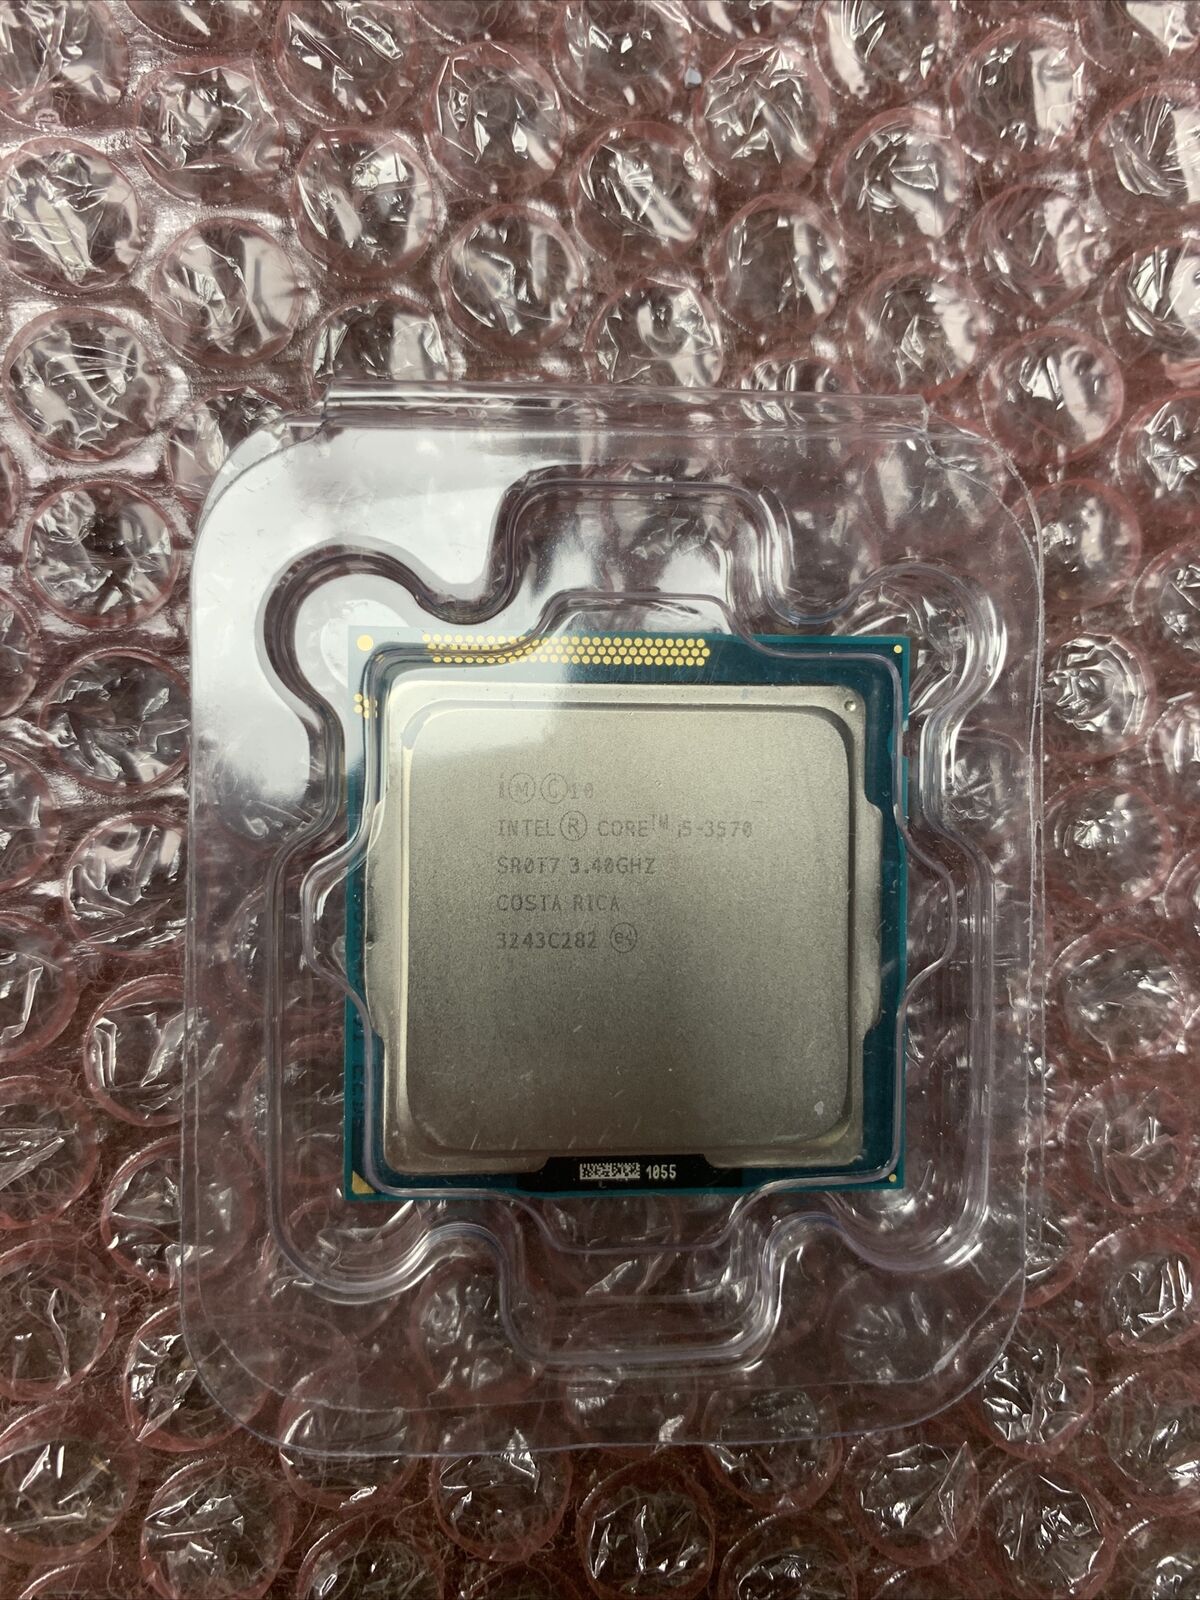 Intel Core i5-3570 SR0T7 3.4GHz Quad-Core Processor